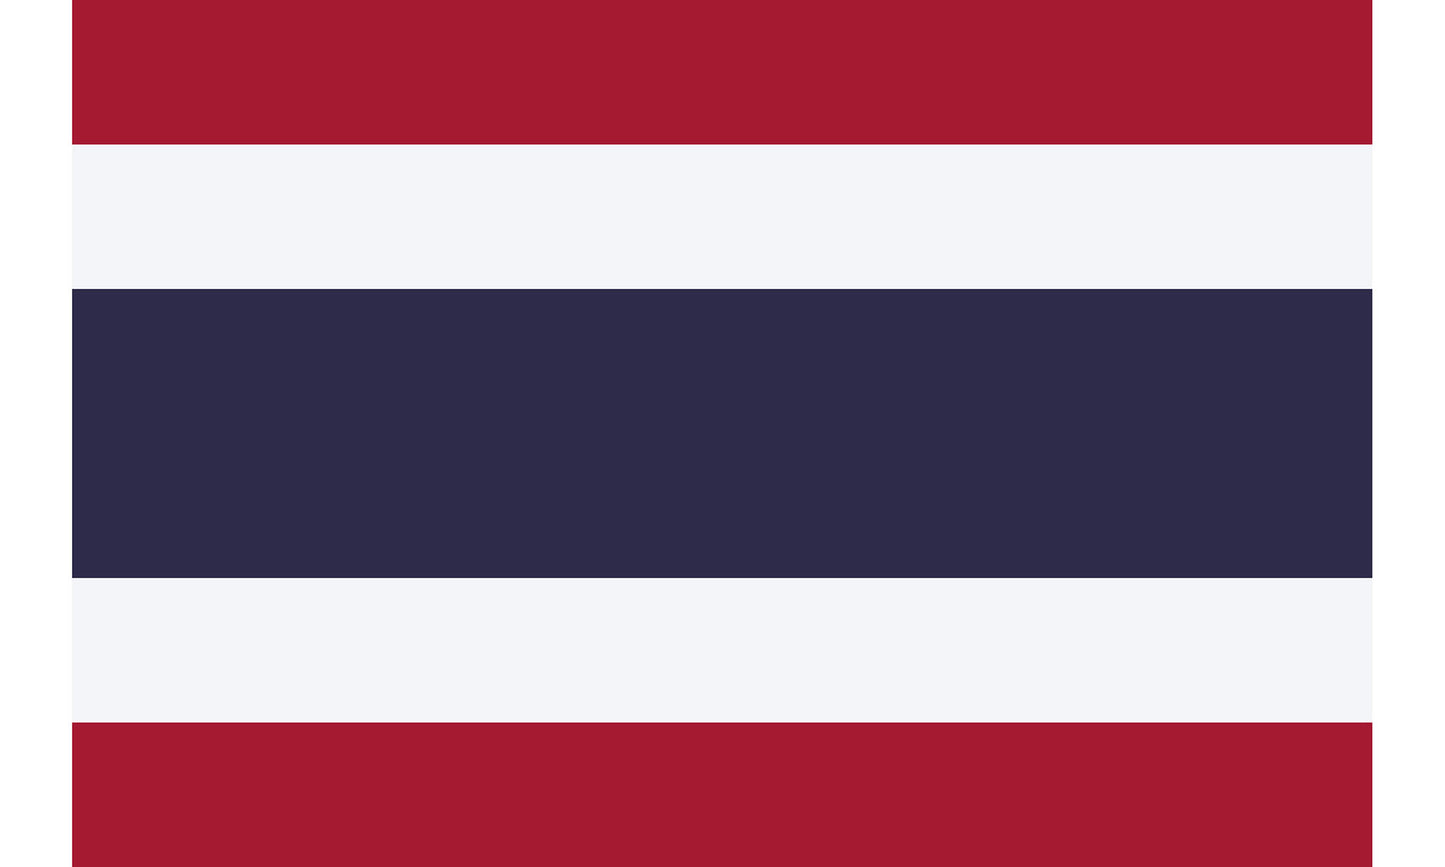 UF-THA-150x90 - государственный флаг королевства Таиланд. Материал флага: полиэстер с бронзовыми кольцами, размер: 90 см х 150 см